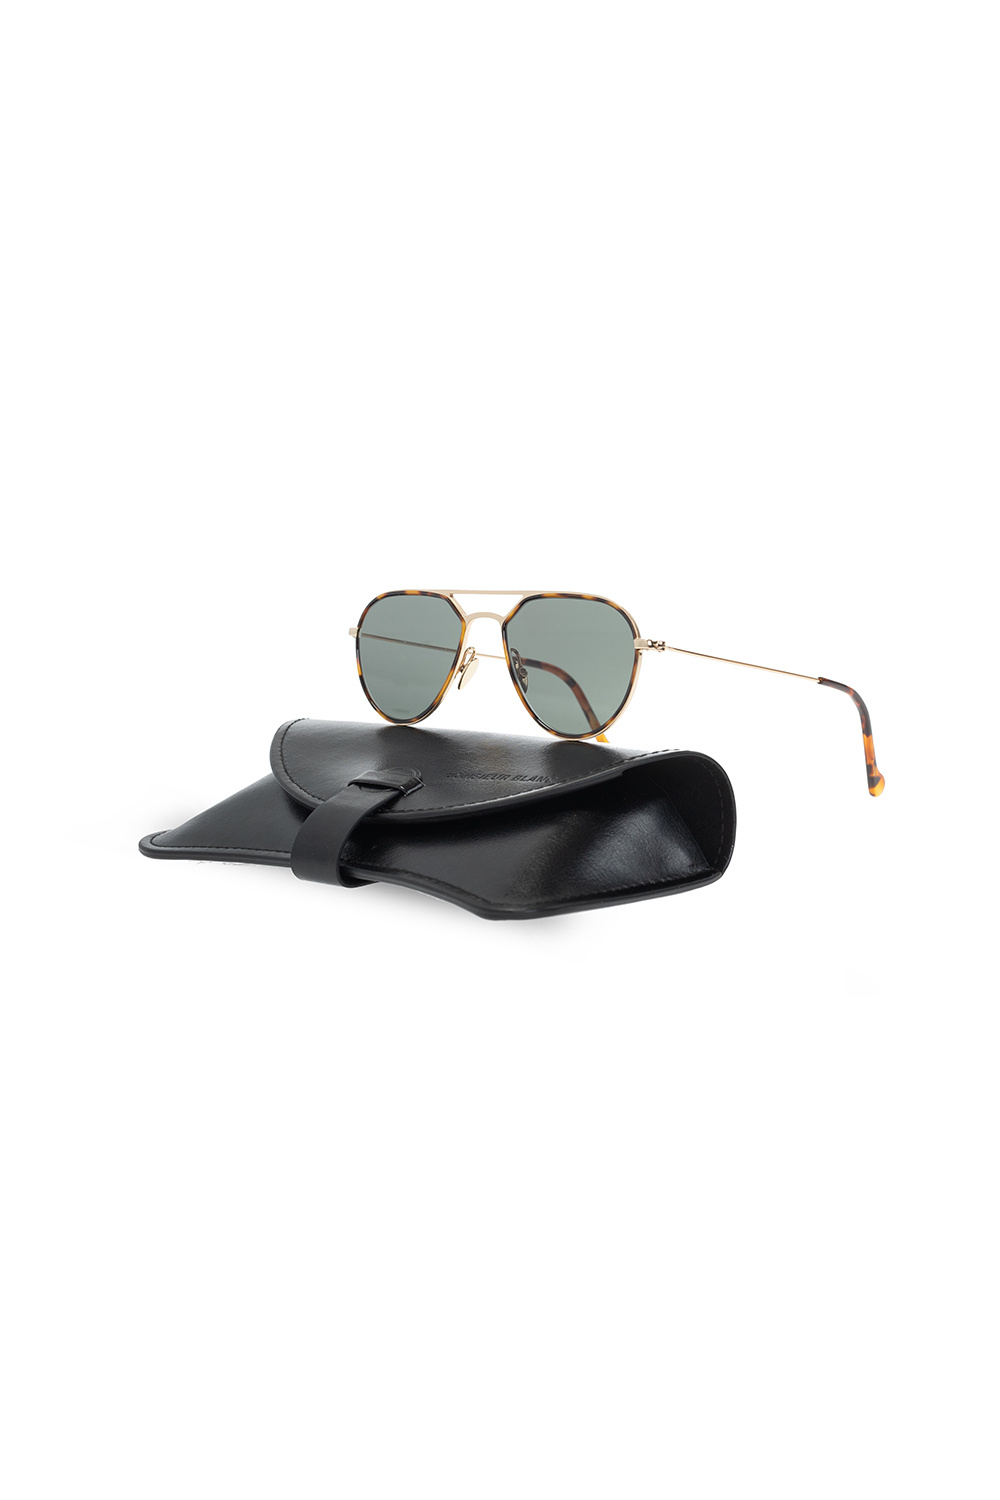 Monsieur Blanc ‘Claude’ sunglasses